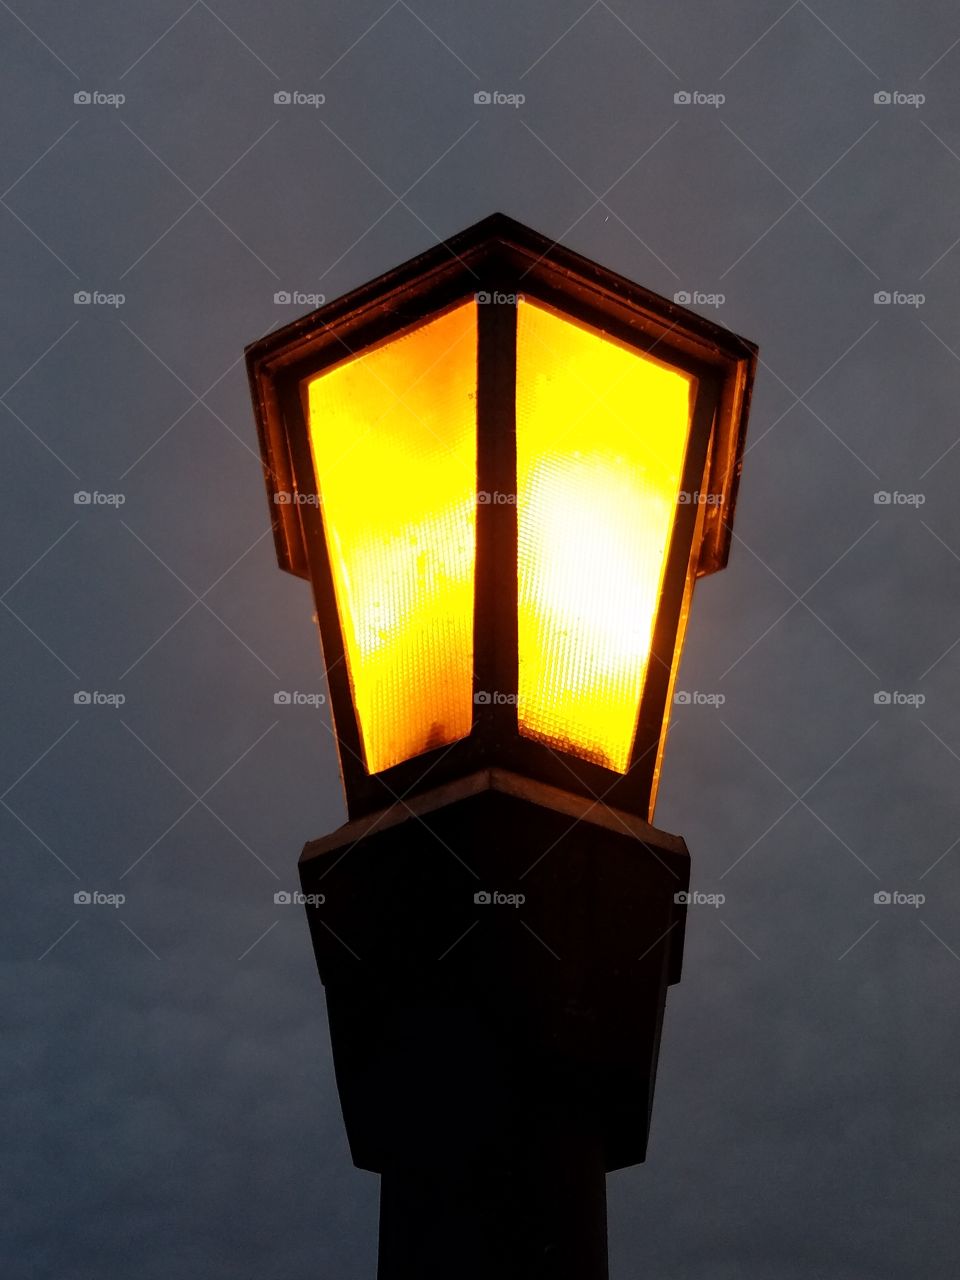 Lamp closeup at night